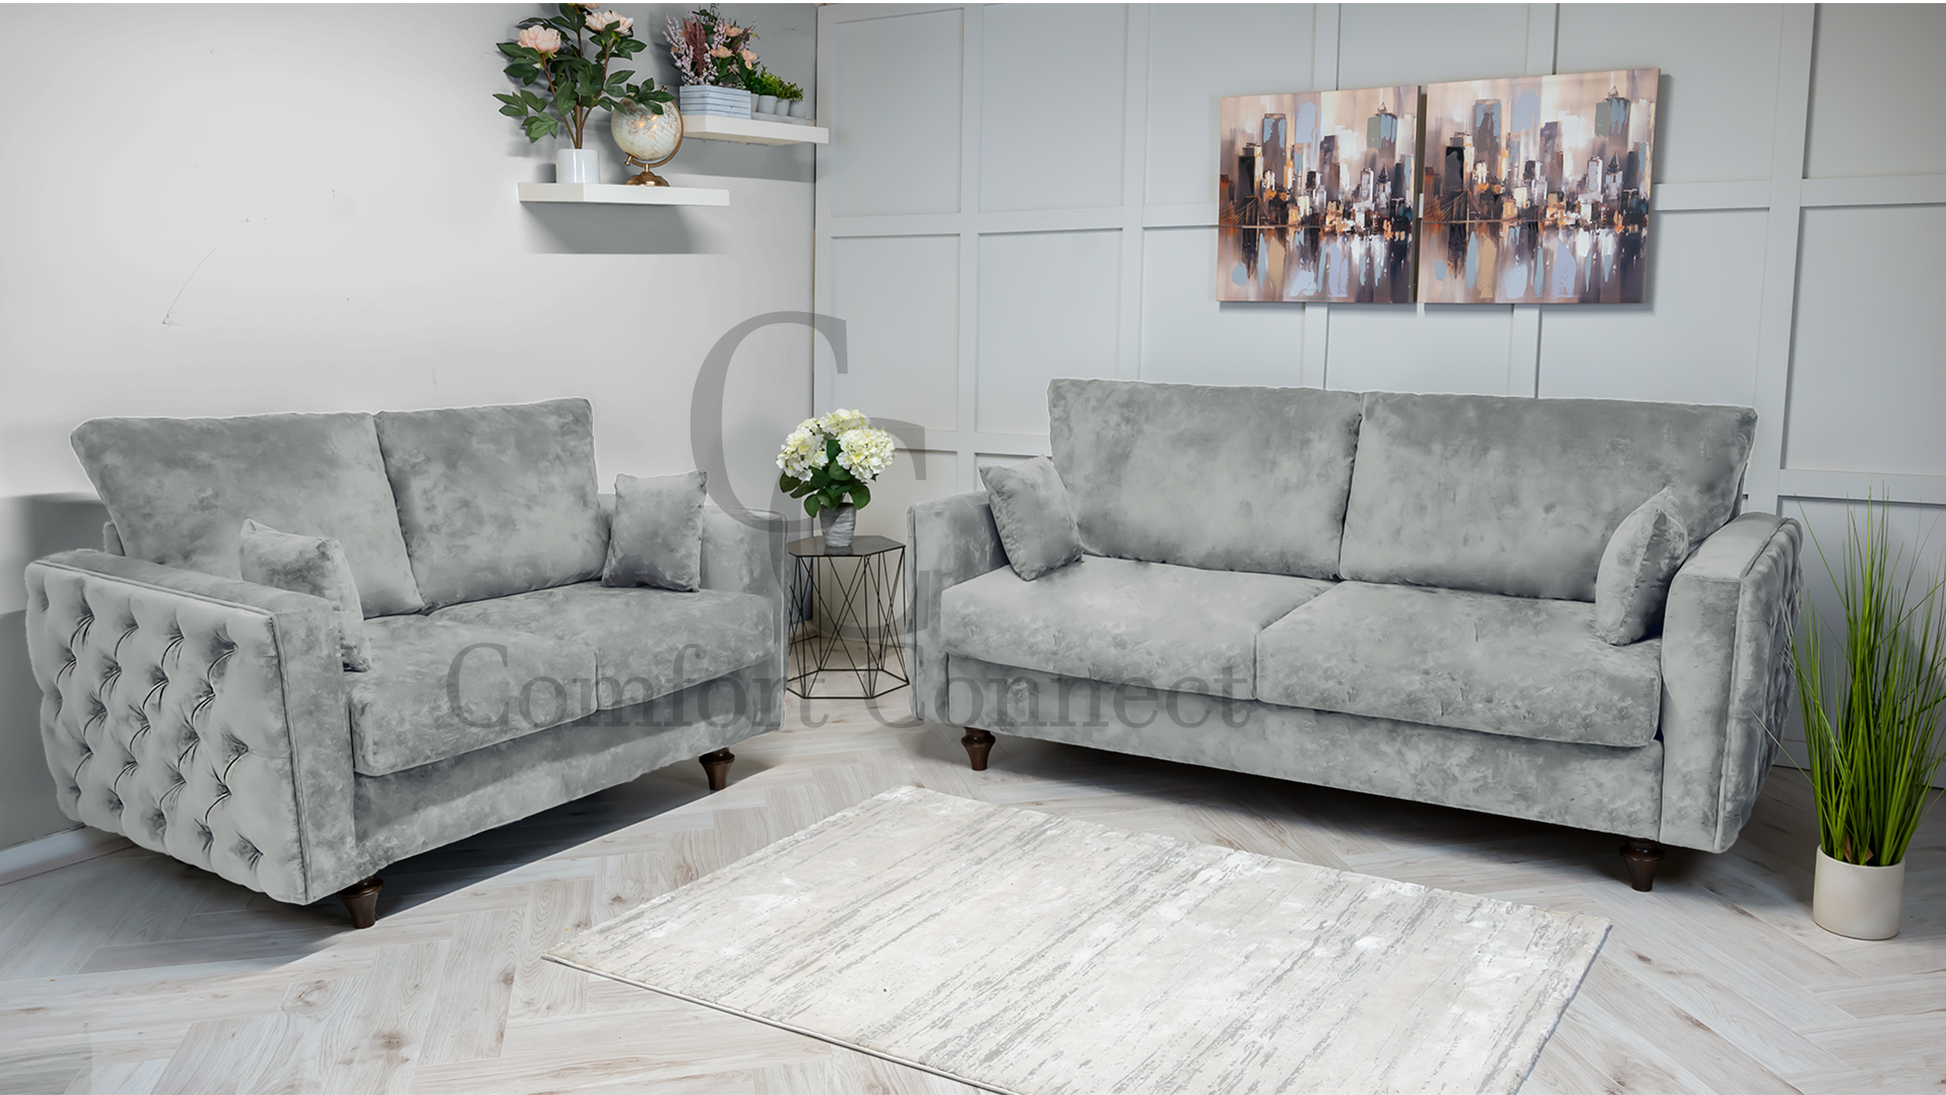 Oak Sofa Set | Stylish Oak Sofa Set | Comfort Connect